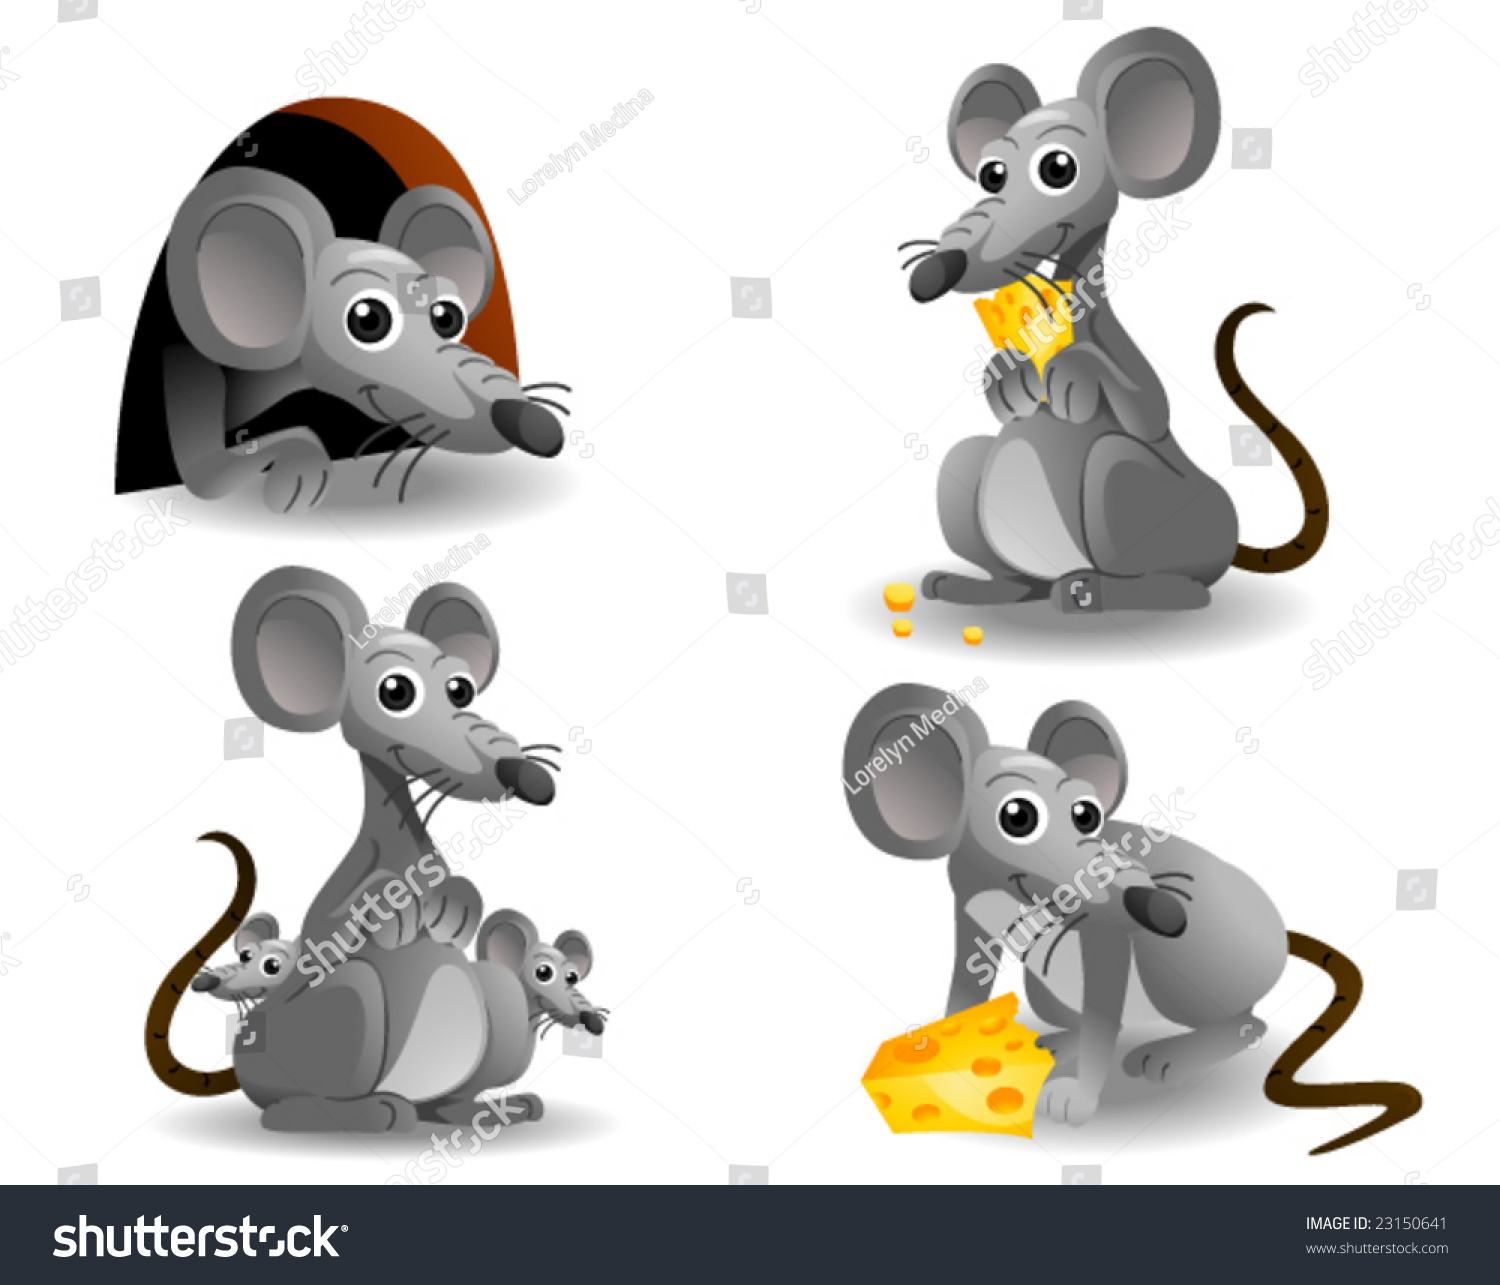 Mouse - Vector - 23150641 : Shutterstock